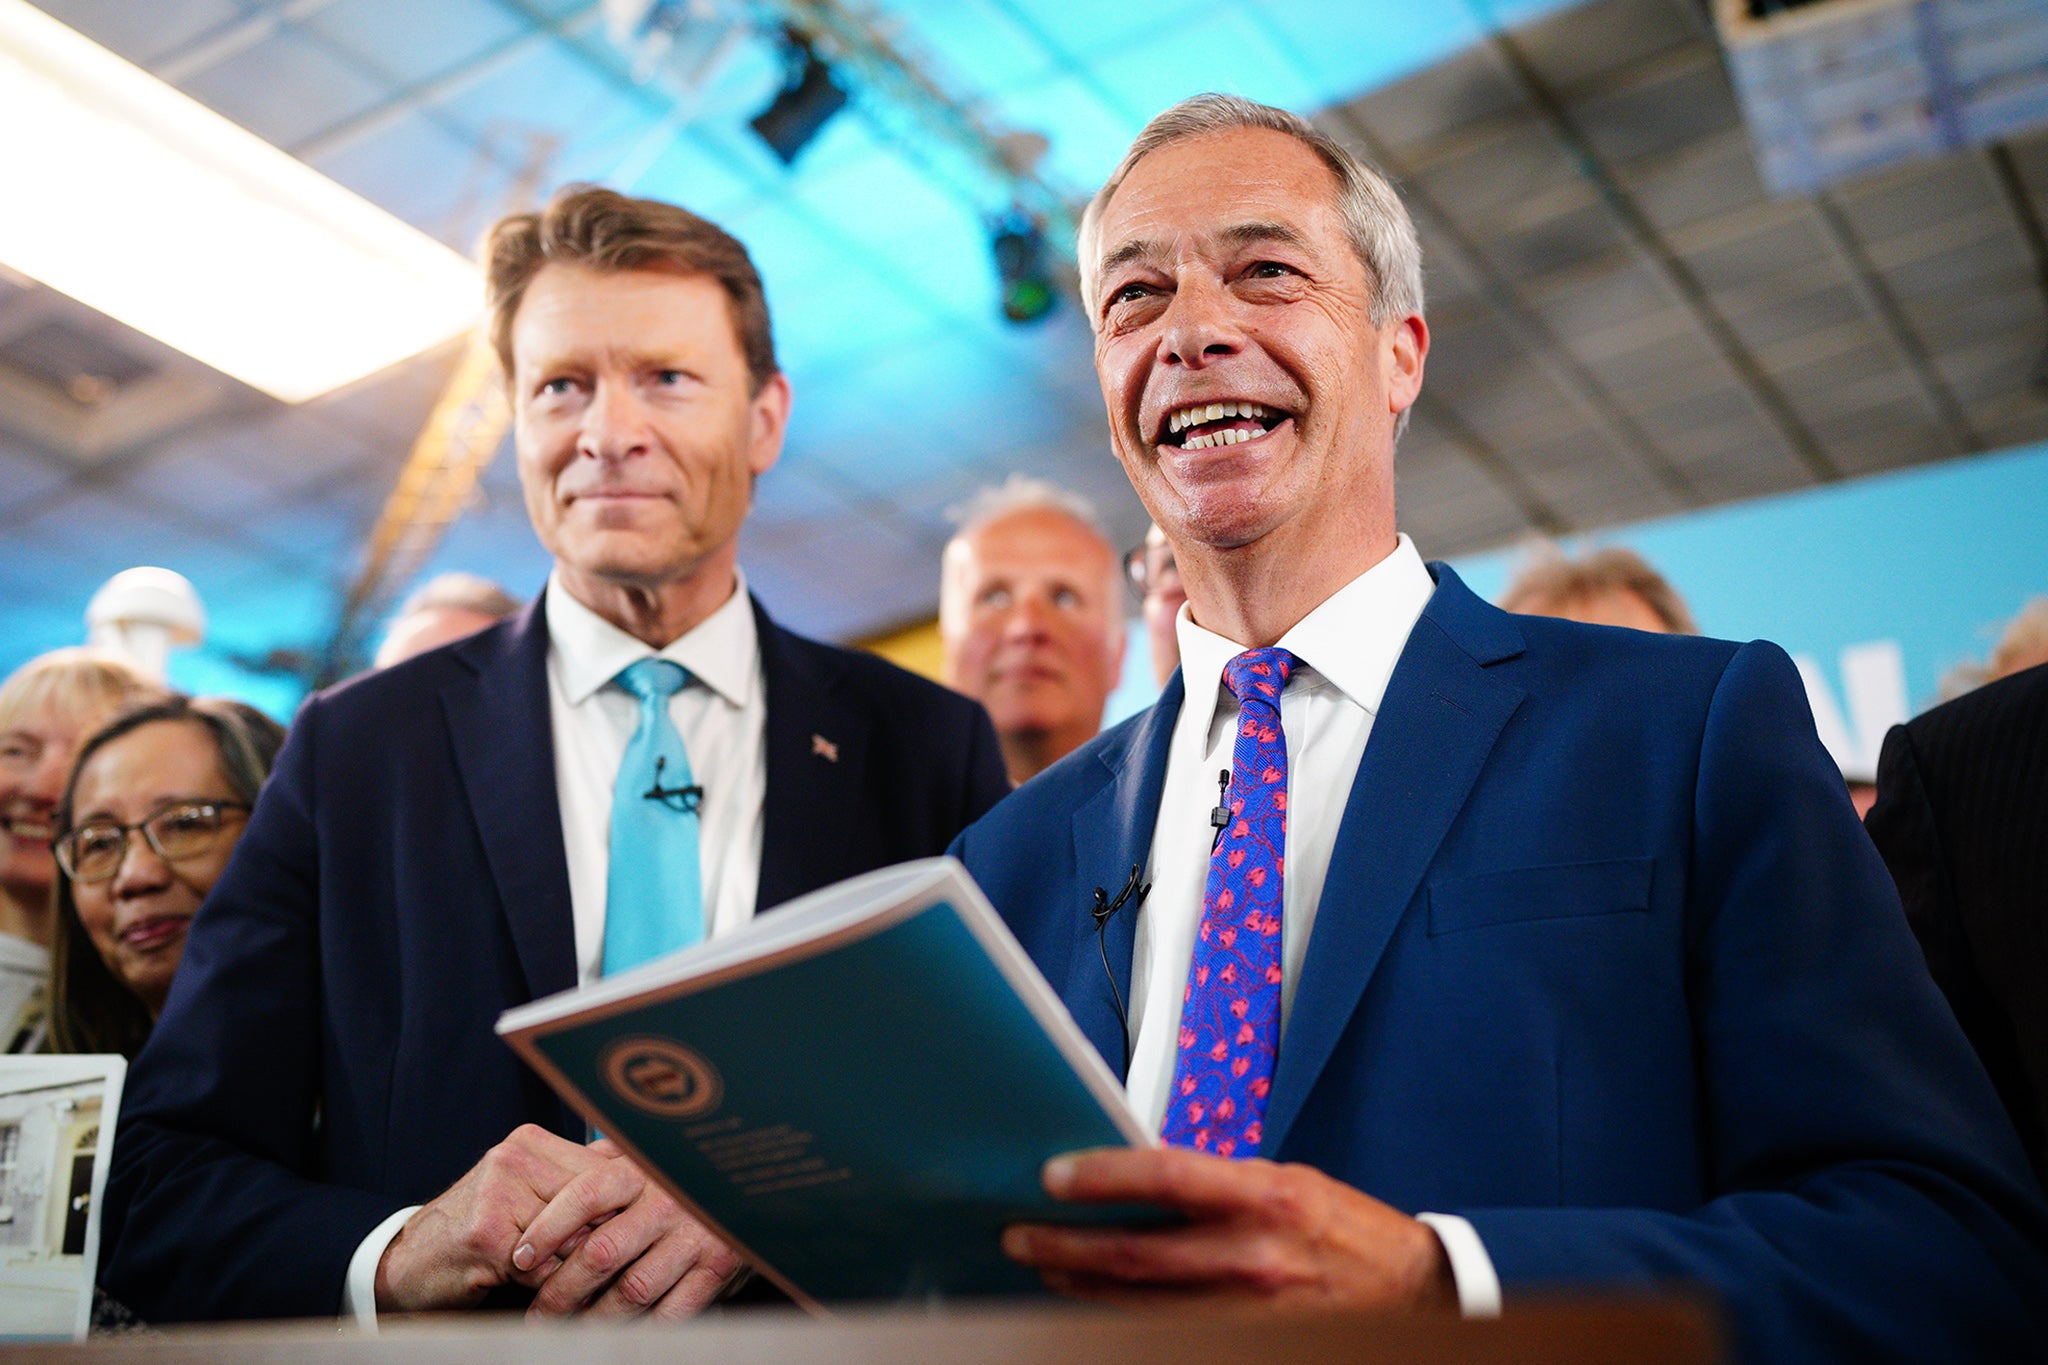 Reform UK chairman Richard Tice and party leader Nigel Farag